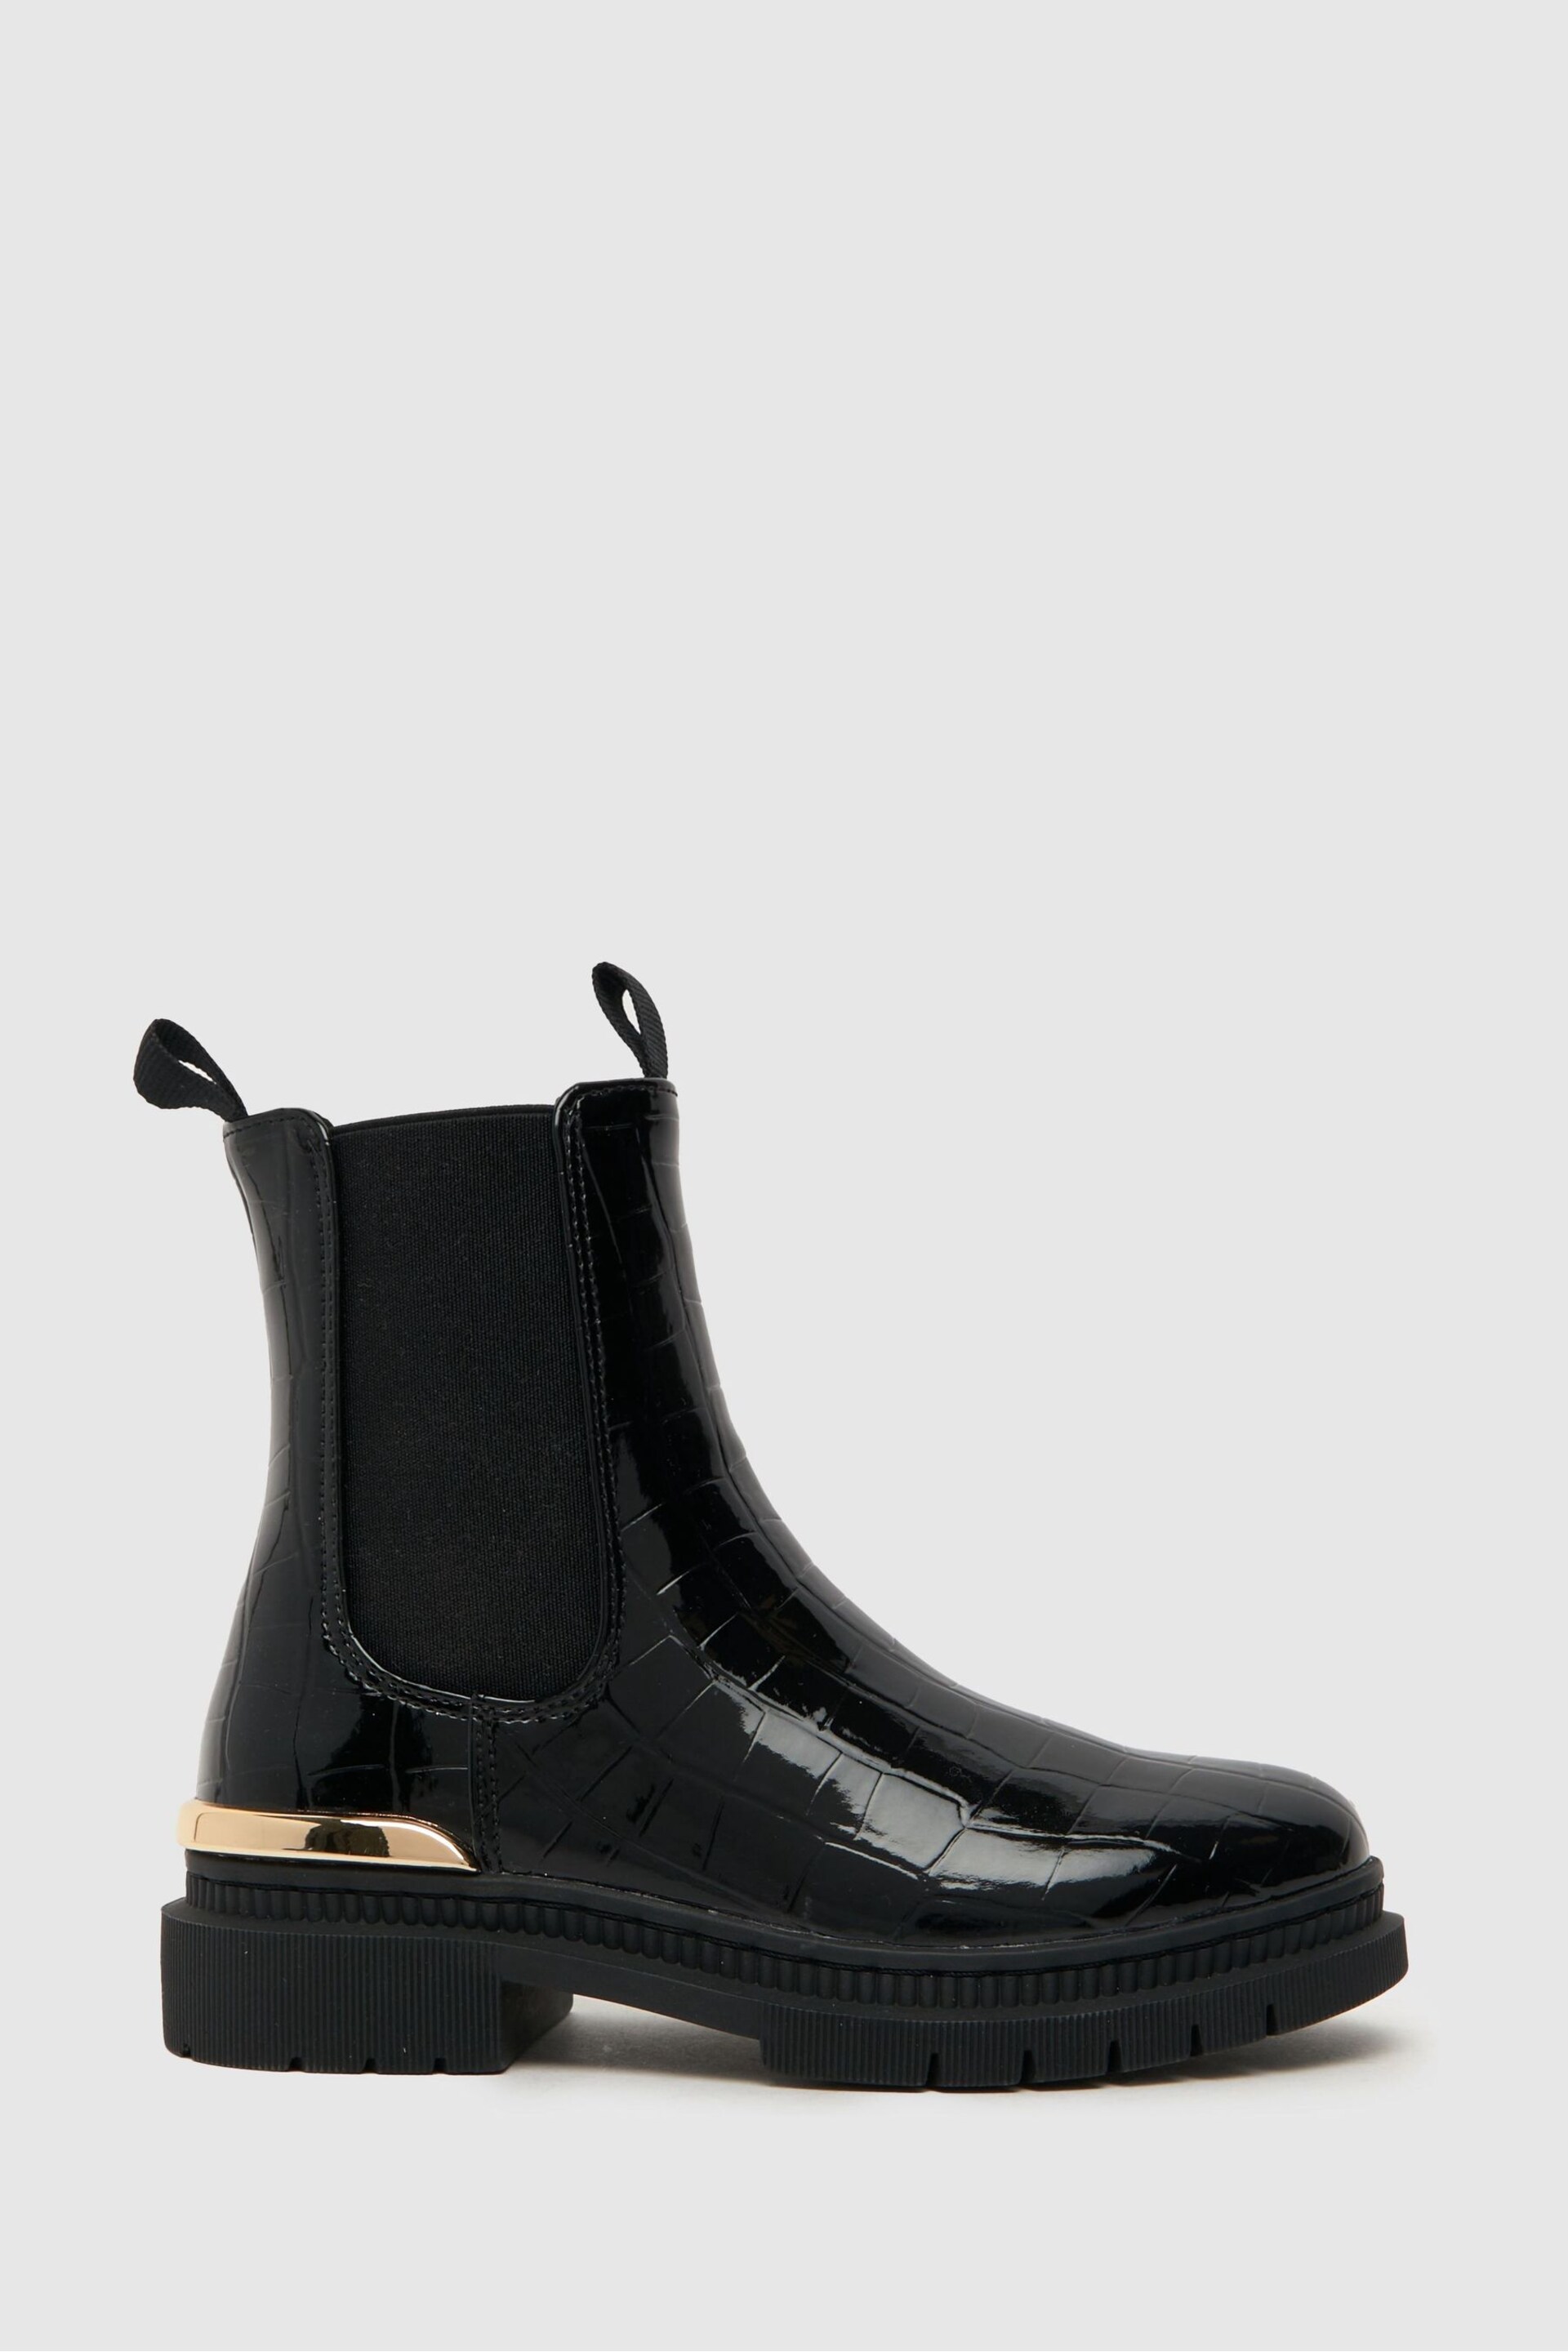 Schuh Calm Black Croc Boots - Image 1 of 4